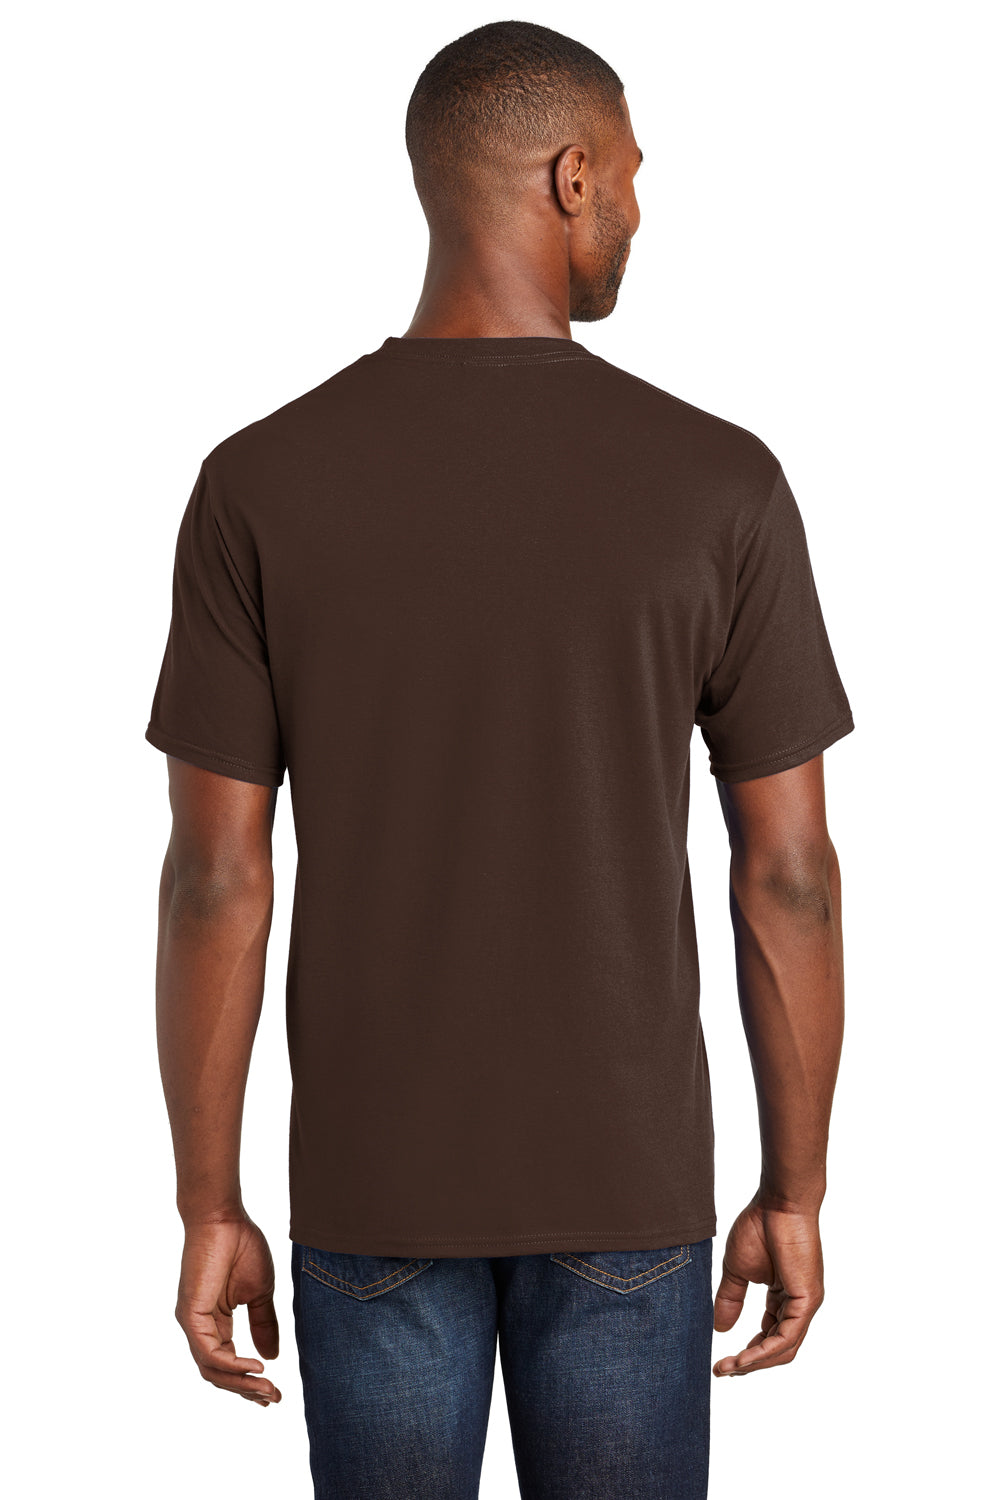 Port & Company PC450 Mens Fan Favorite Short Sleeve Crewneck T-Shirt Chocolate Brown Back